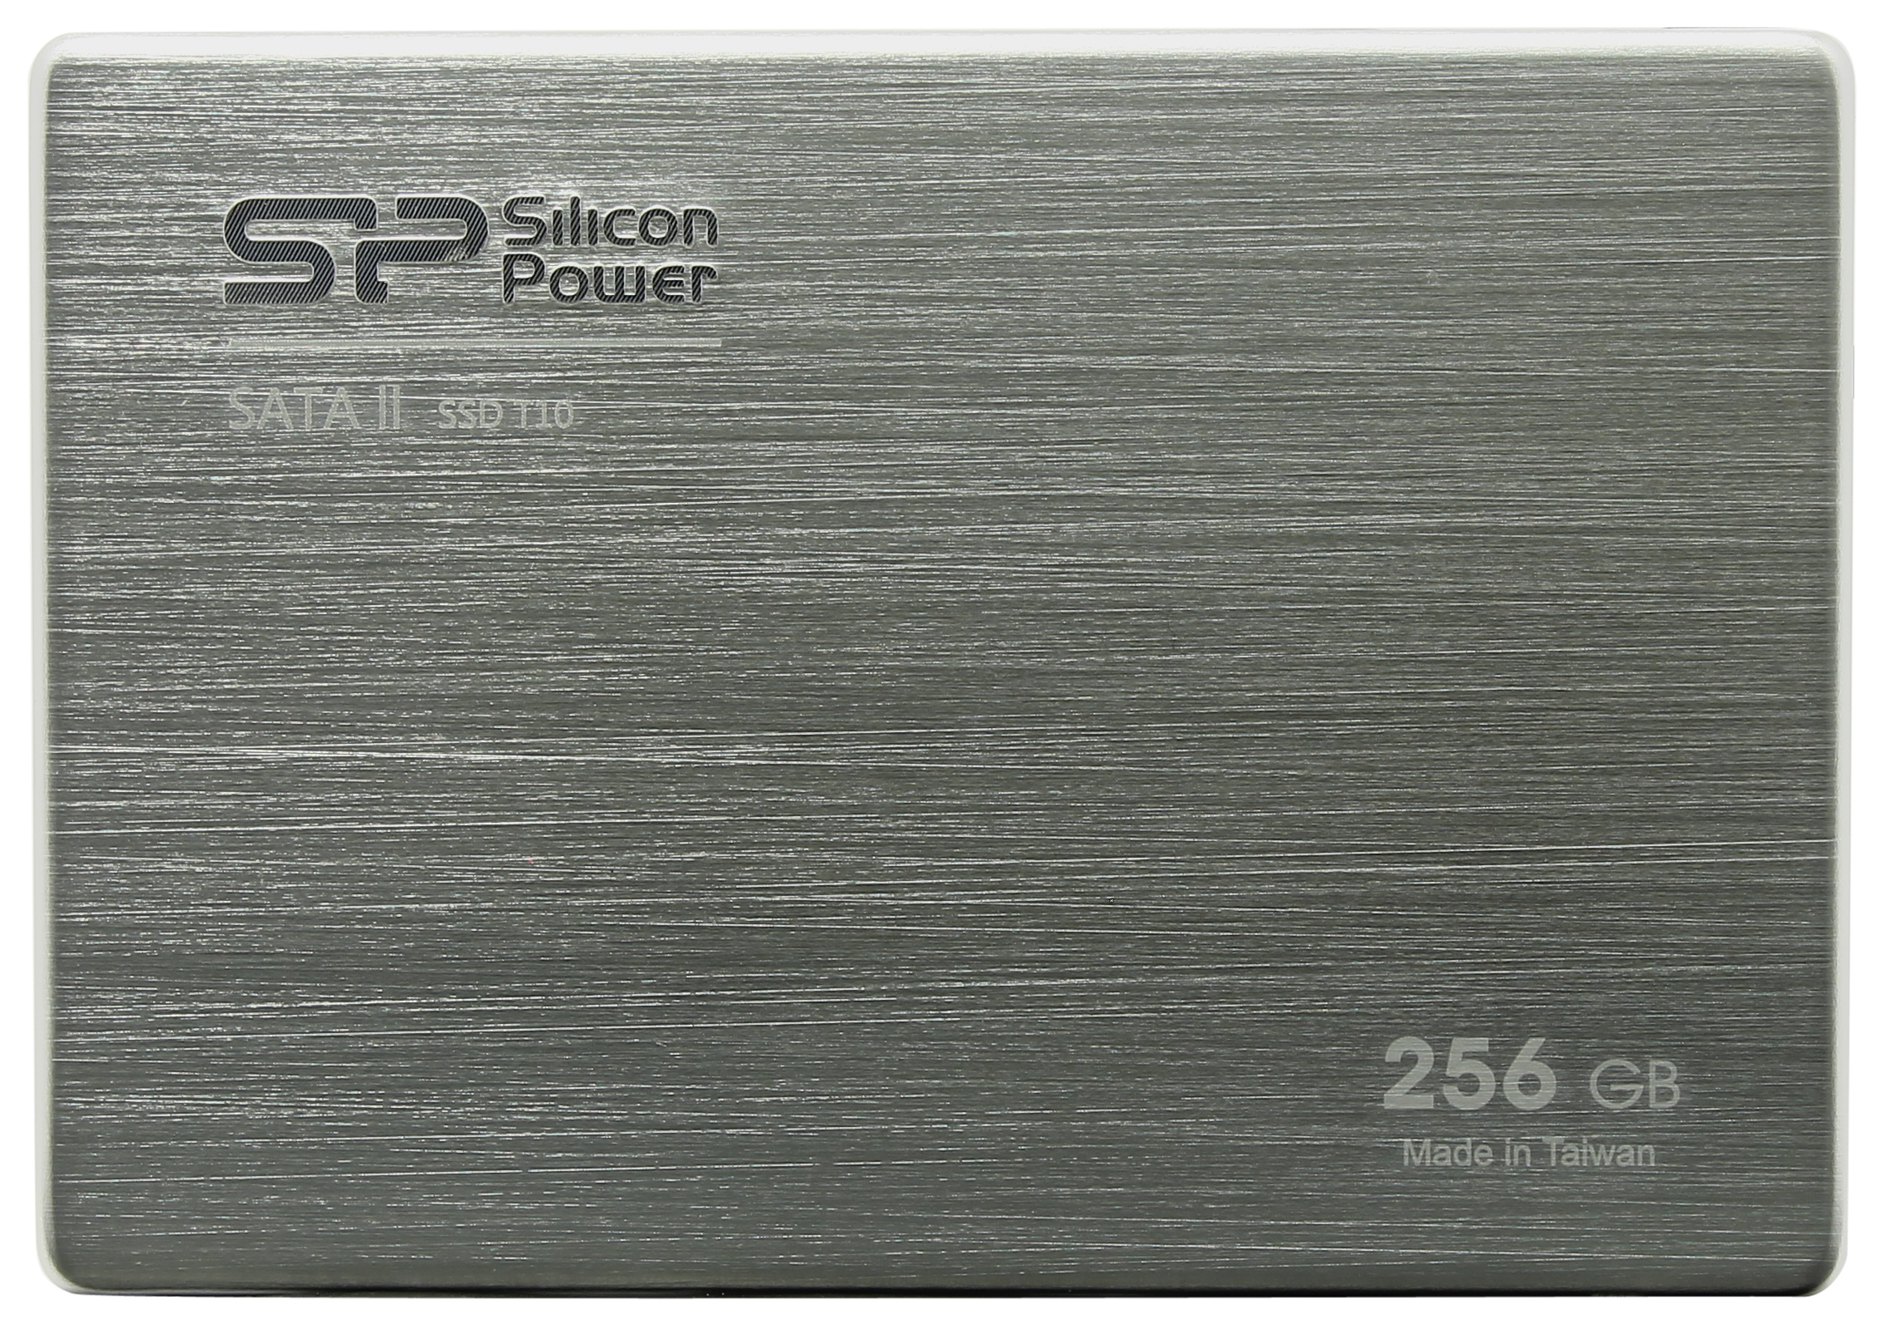 Техно 20 про 256 гб. SSD Silicon Power 256gb. Silicon Power ms70 256gb. Faster Fu-10 256gb. Технопарк 10 про 256 ГБ характеристики.